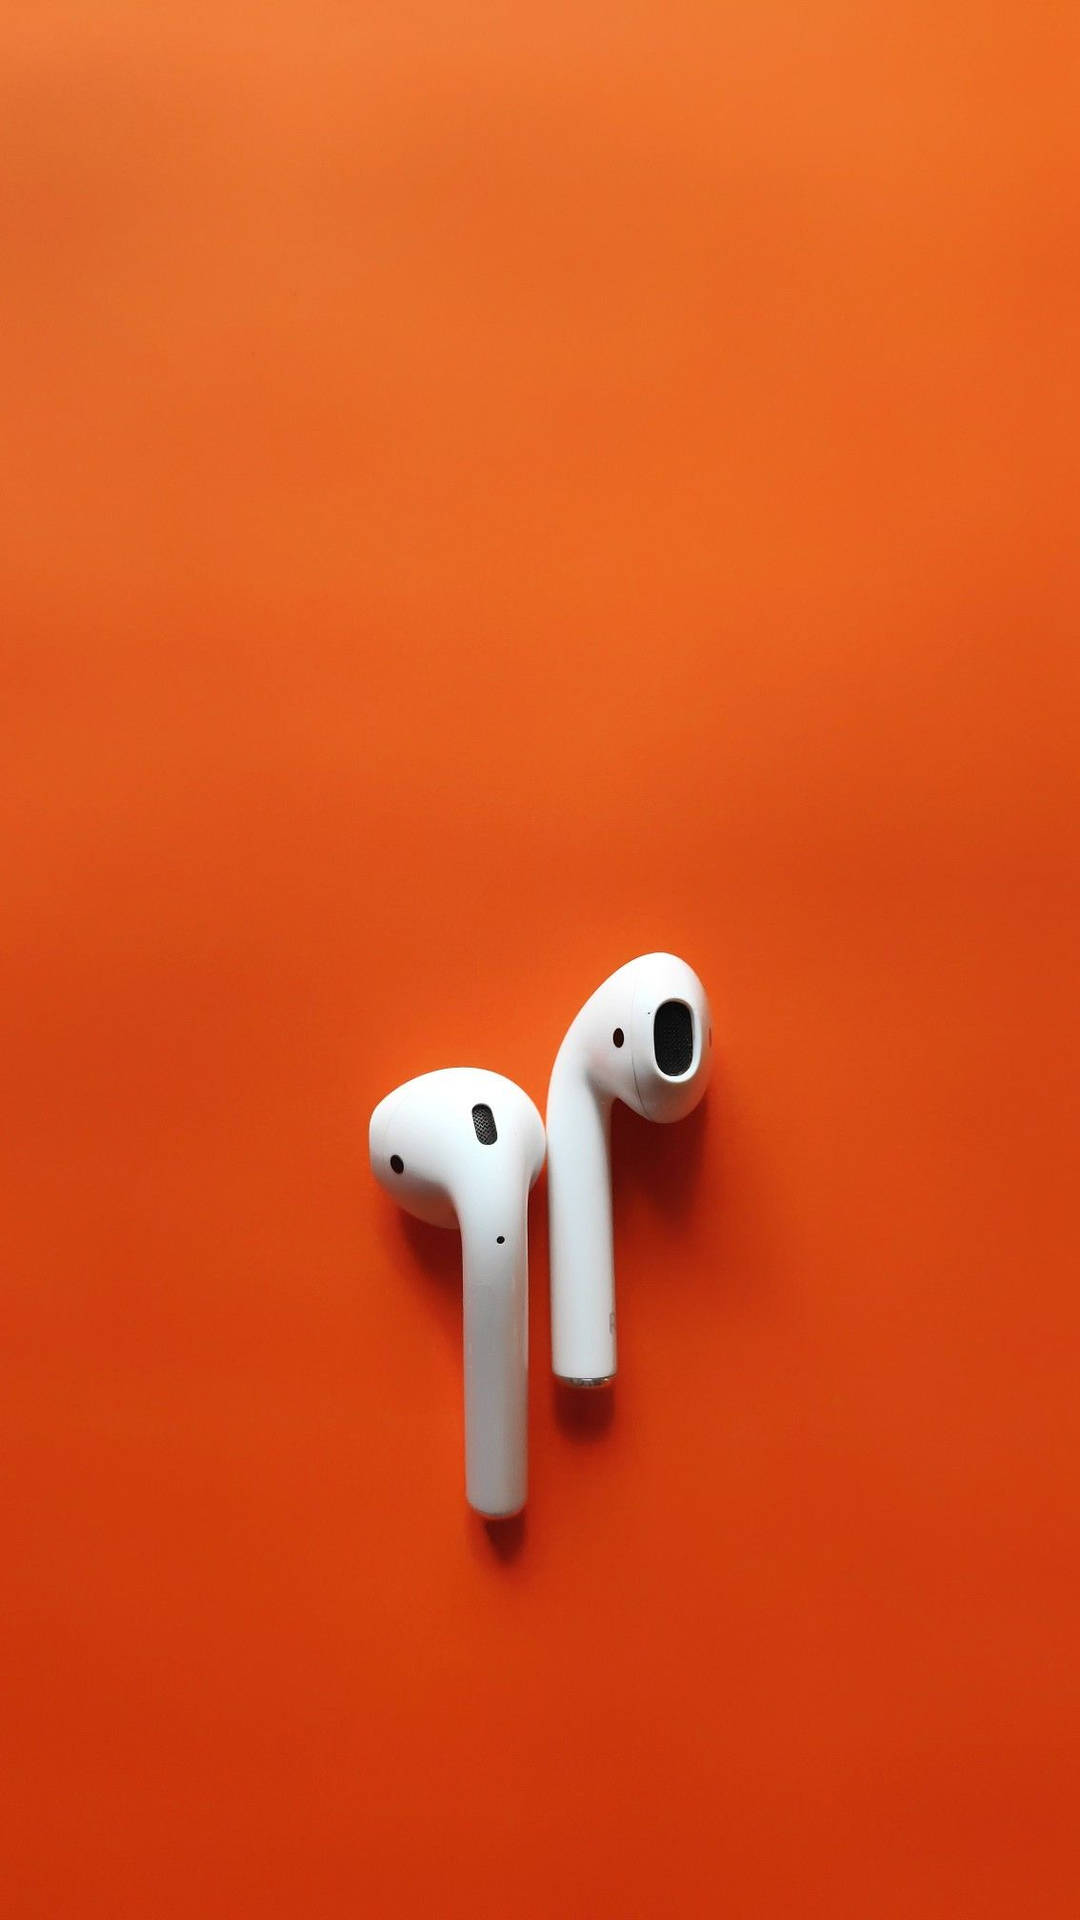 Apple Airpods Orange Aesthetic Background